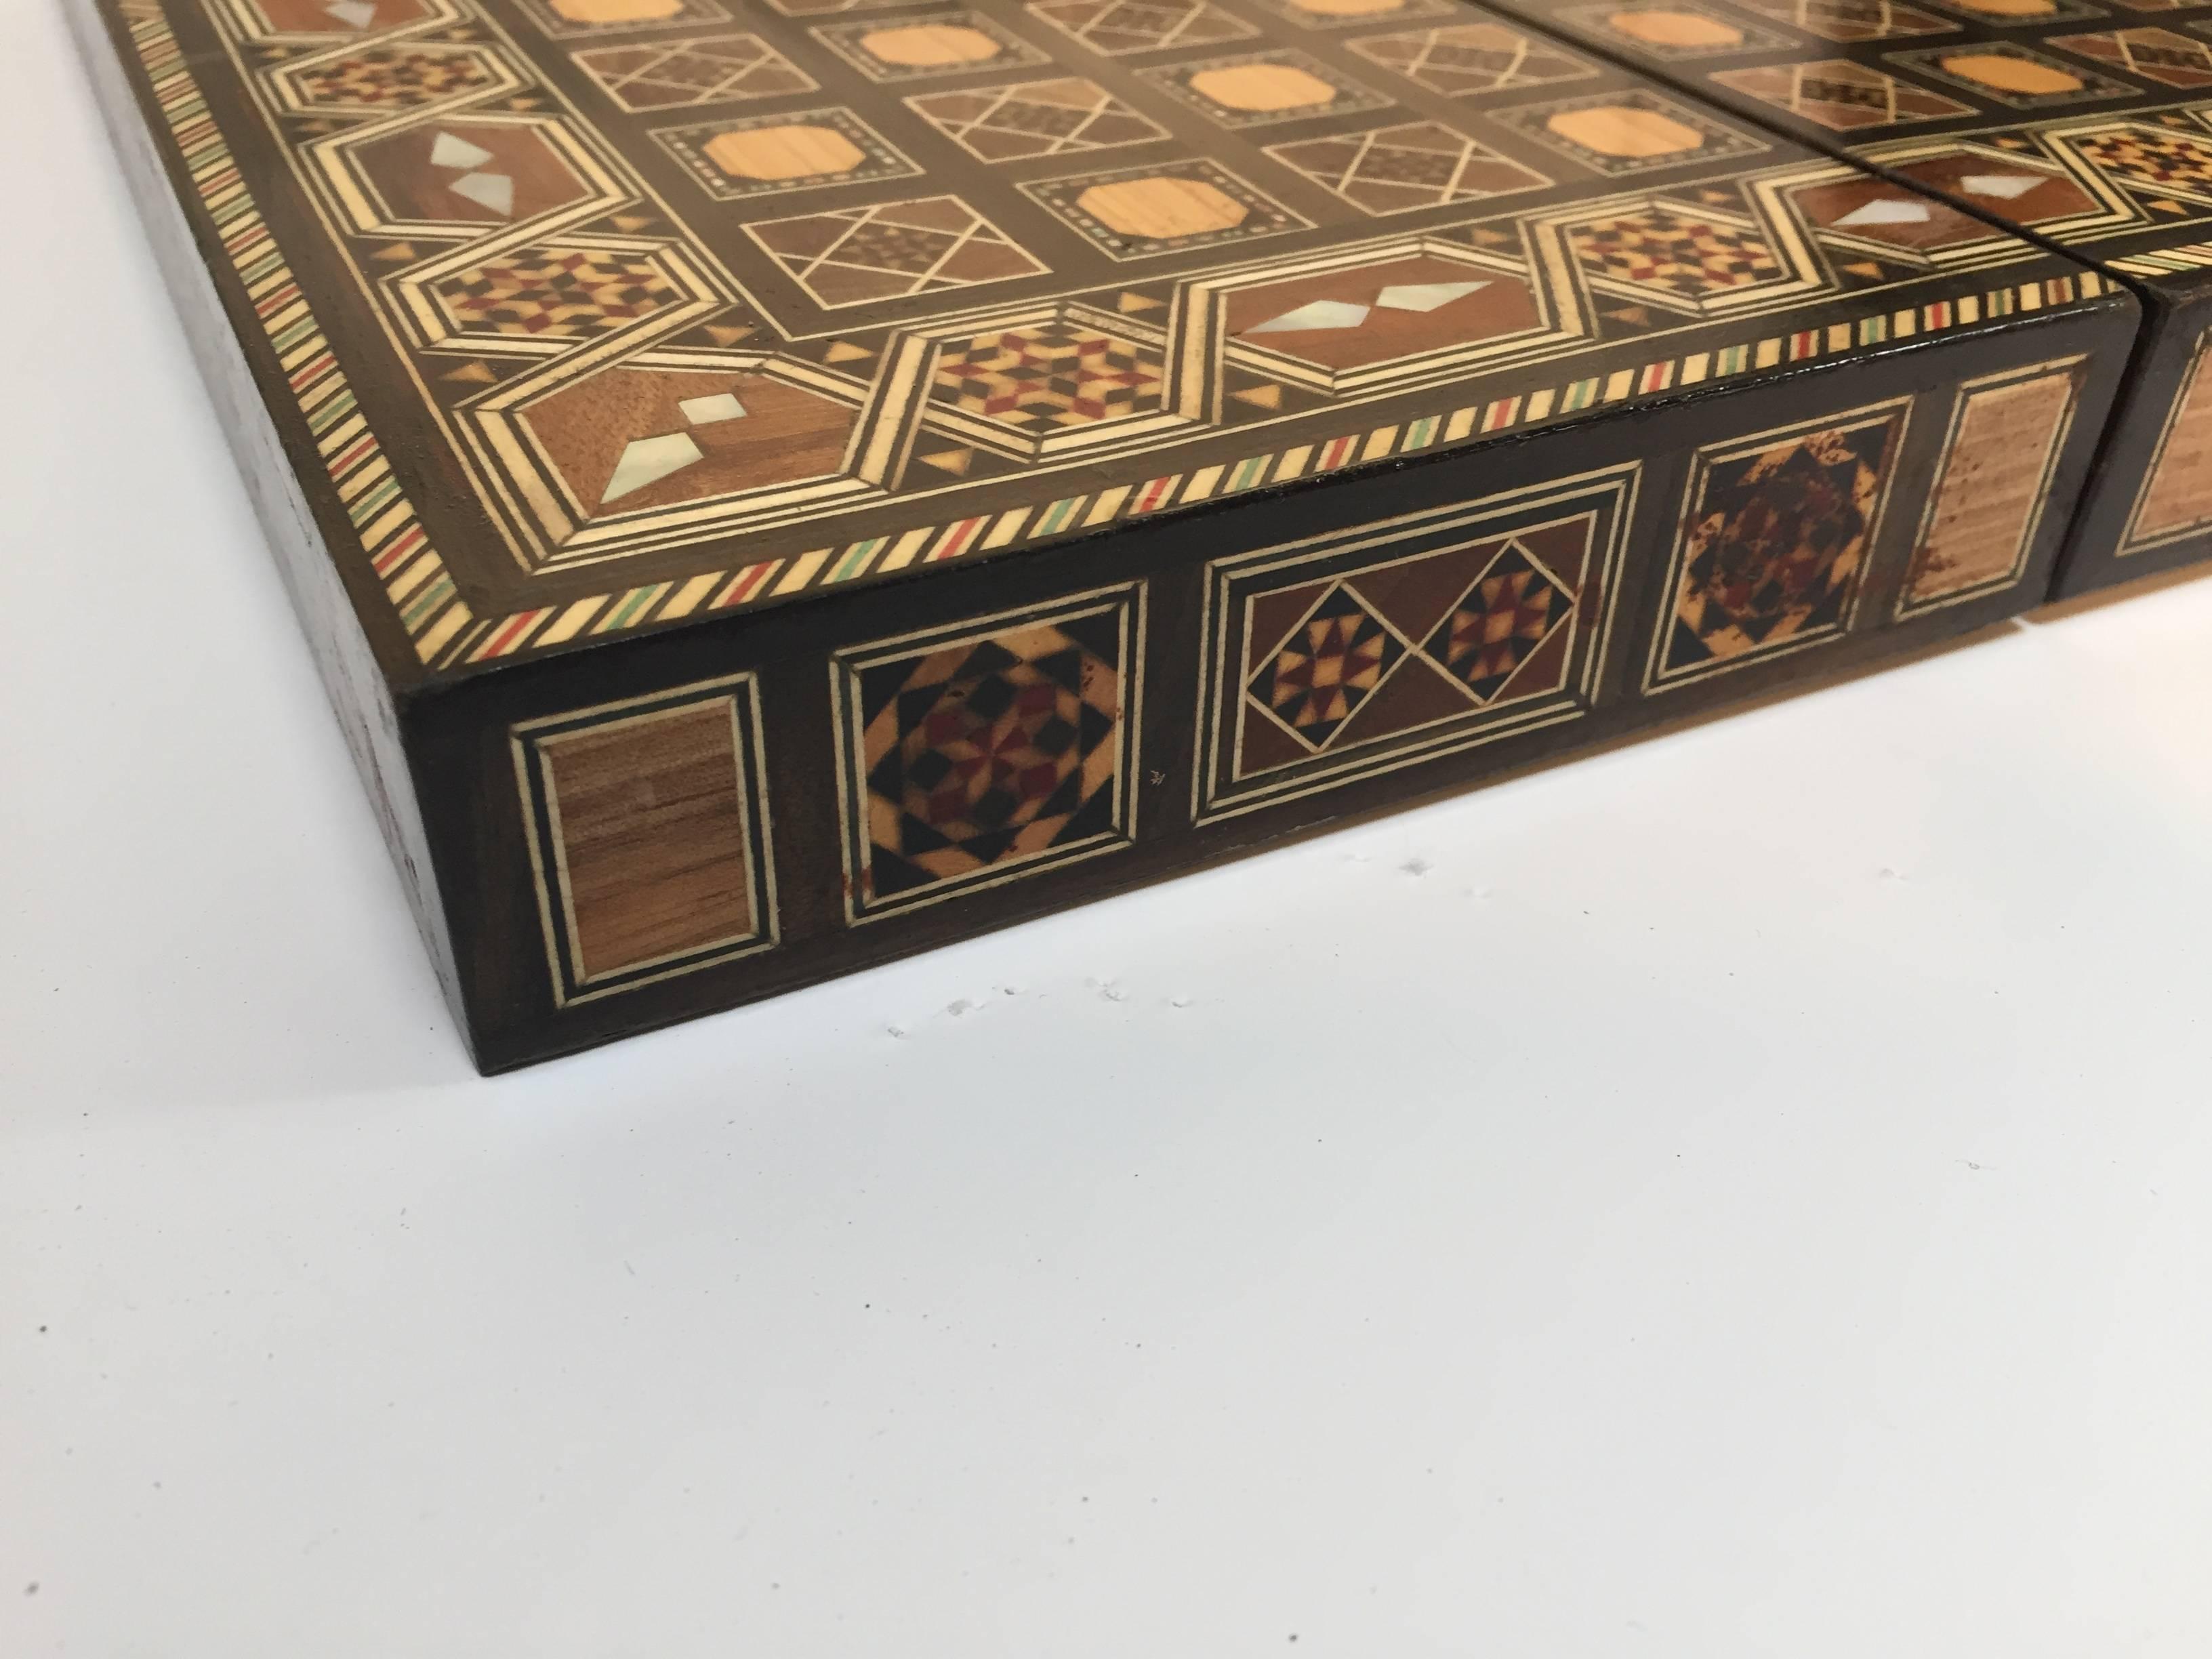 Wood Syrian Inlaid Mosaic Backgammon and Chess Game Box